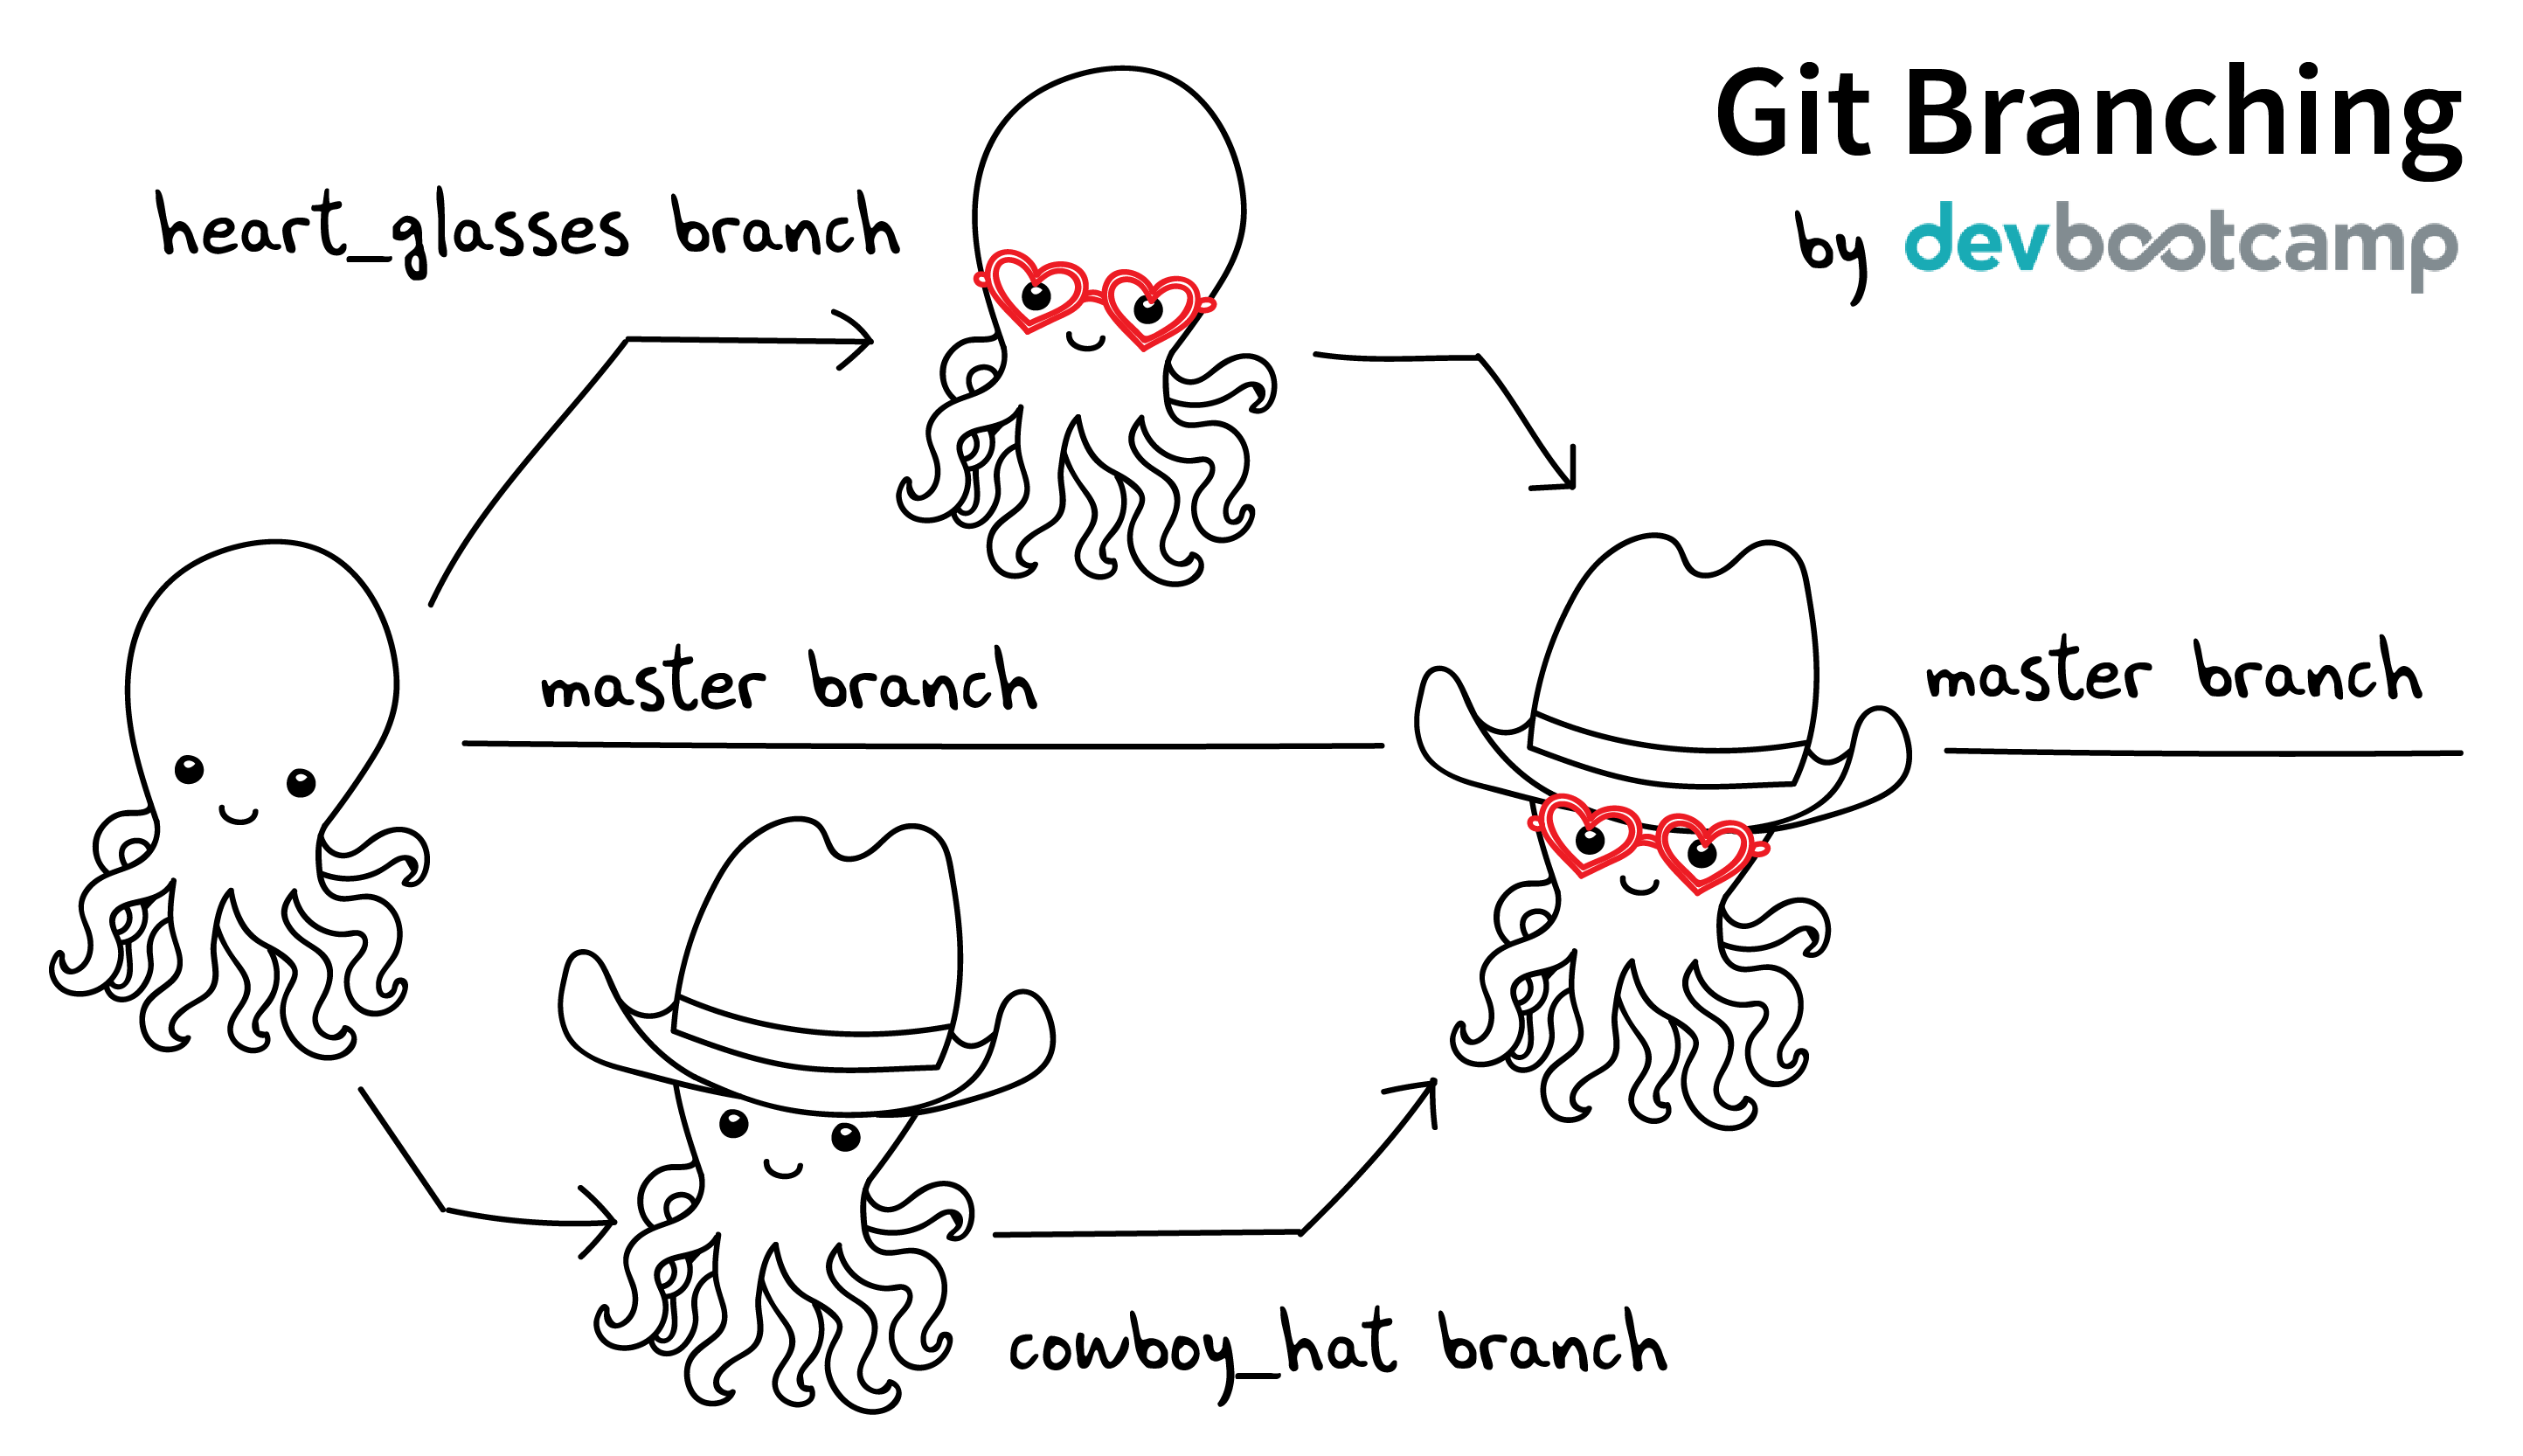 Git branching and Merging (<https://imgur.com/gallery/YG8In8X/new>)